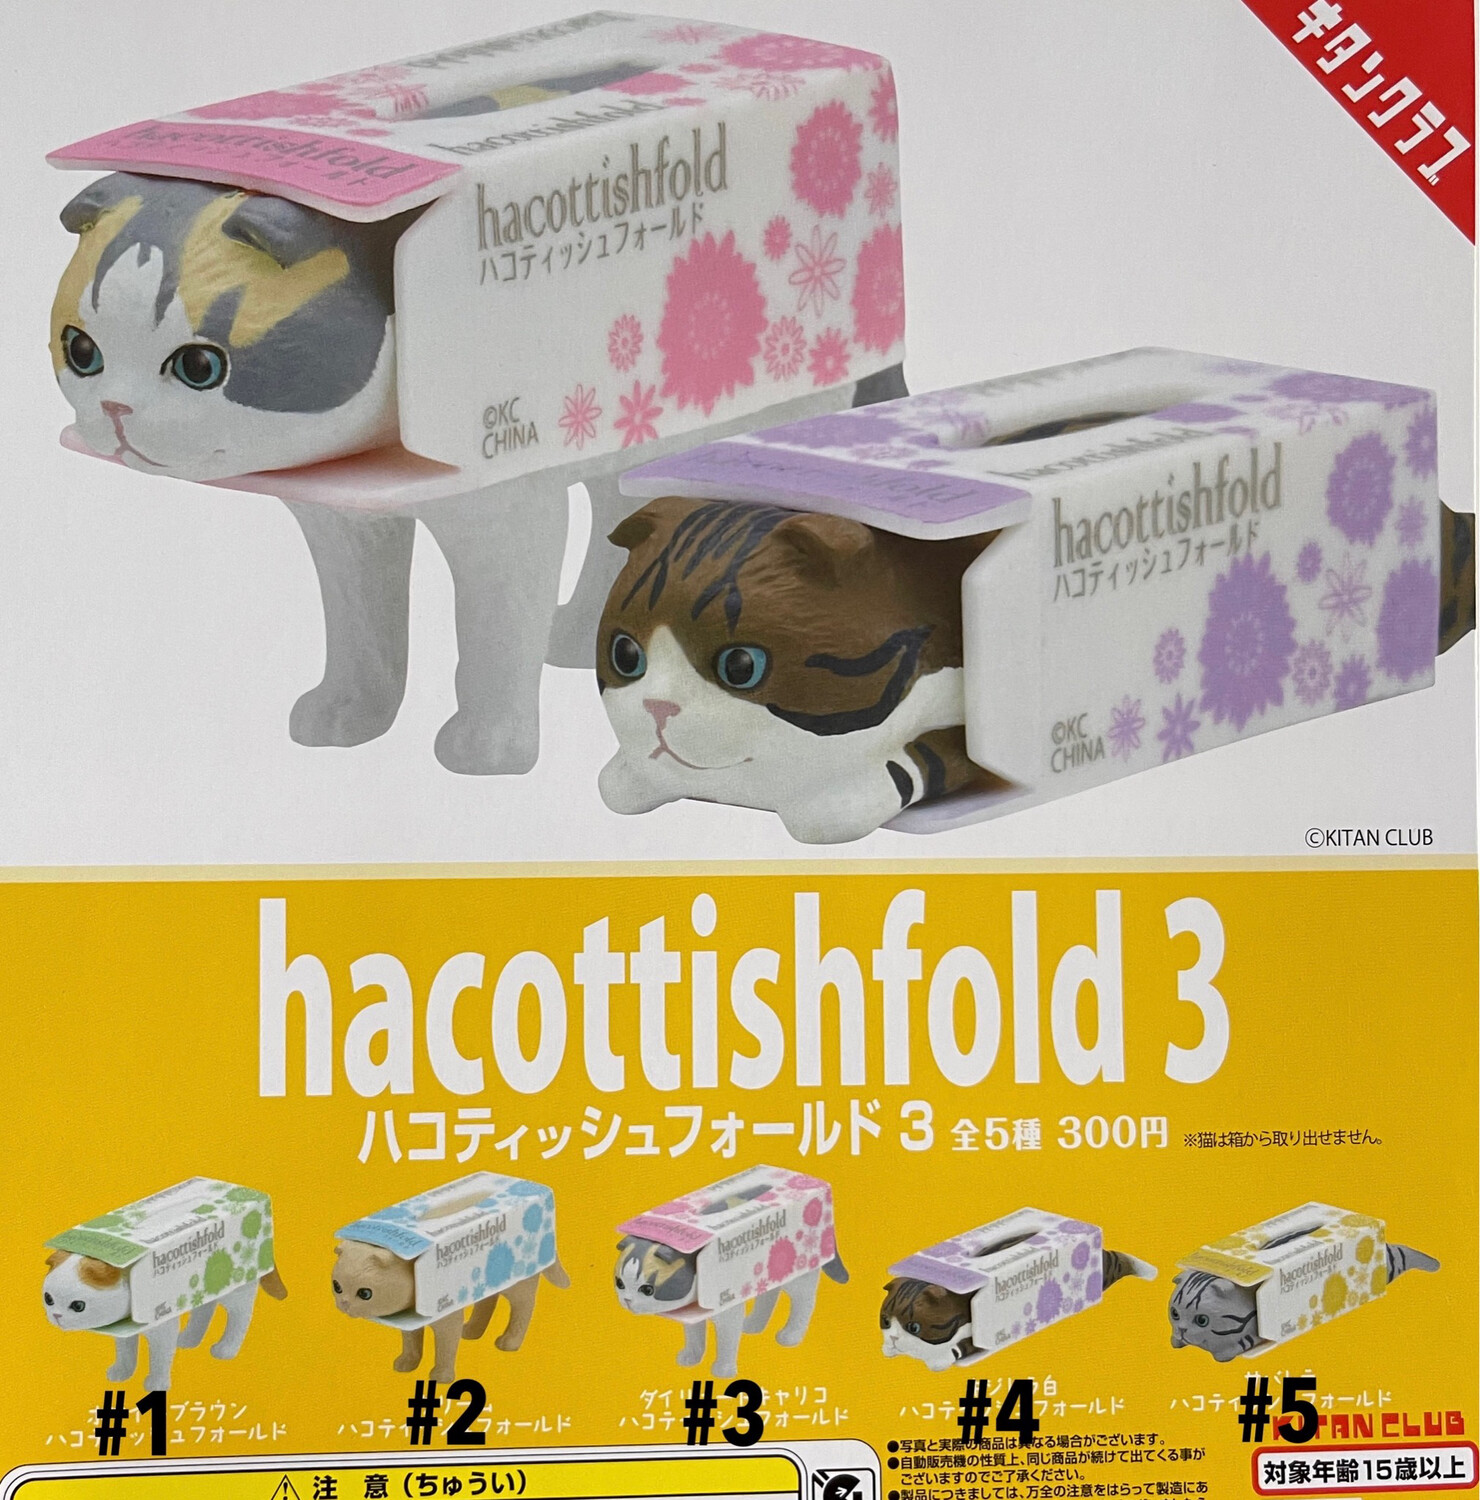 Hacottishfold 3 Box Cat Figure Gashapon